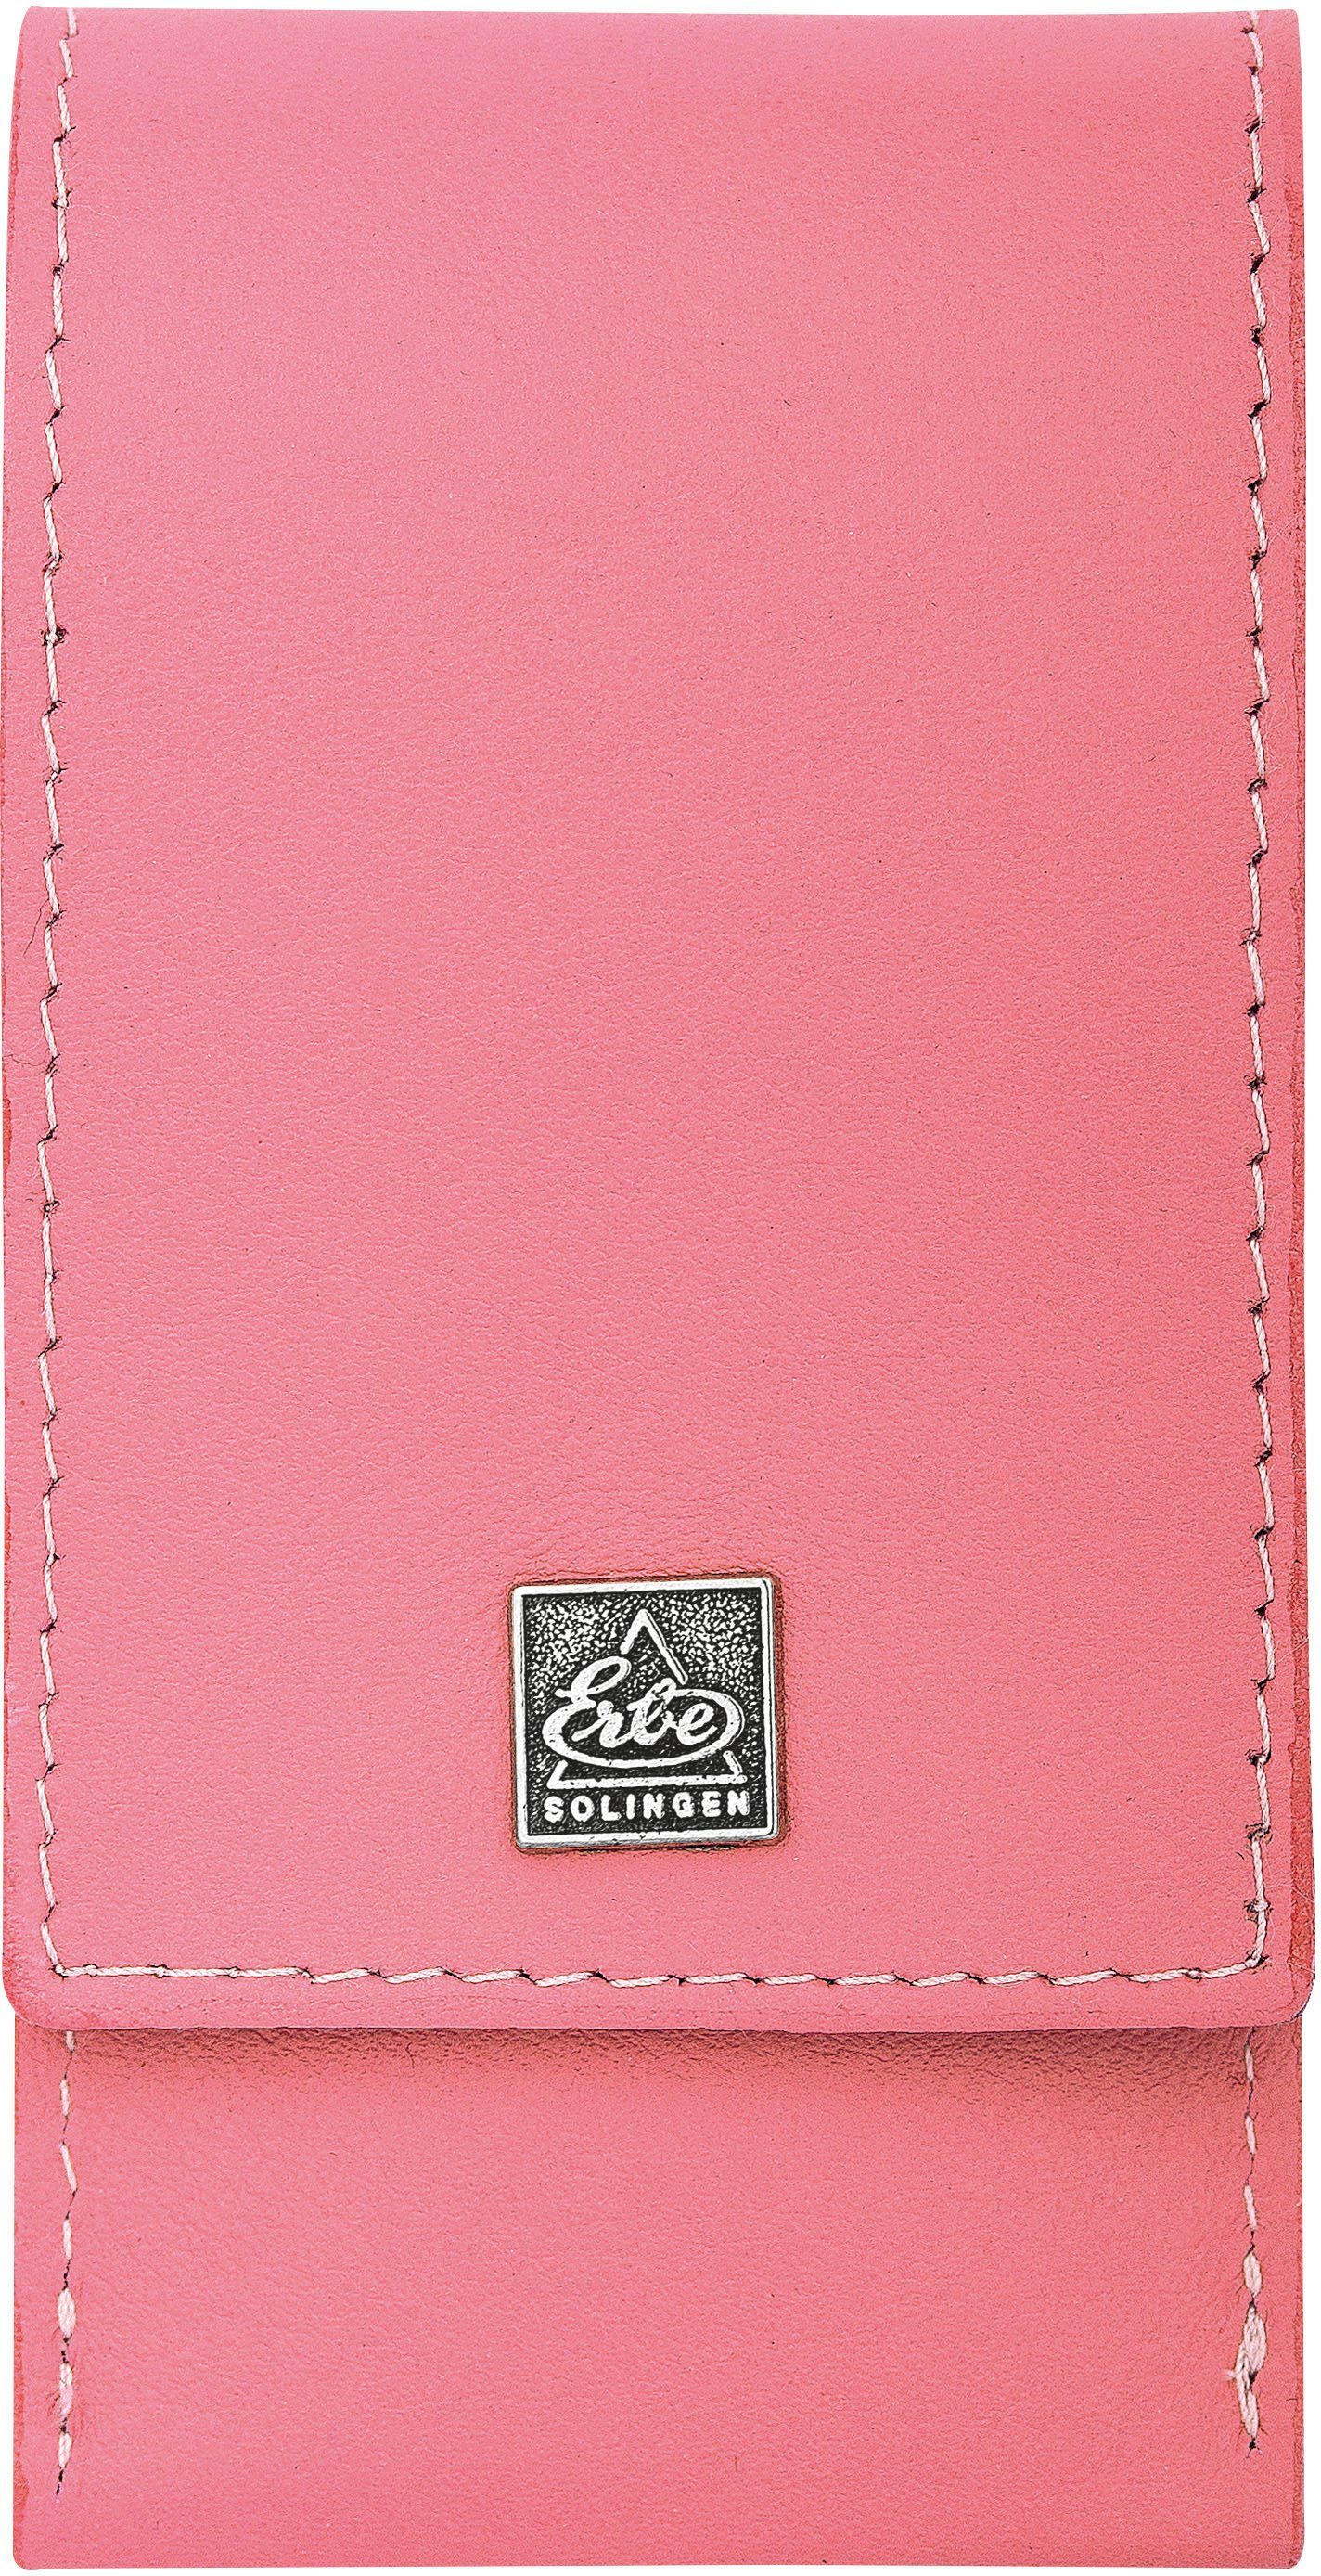 ERBE Maniküre-Etui ERBE Set 3 3-tlg., Taschen-Etui pink, Serie "Colour", Maniküre tlg